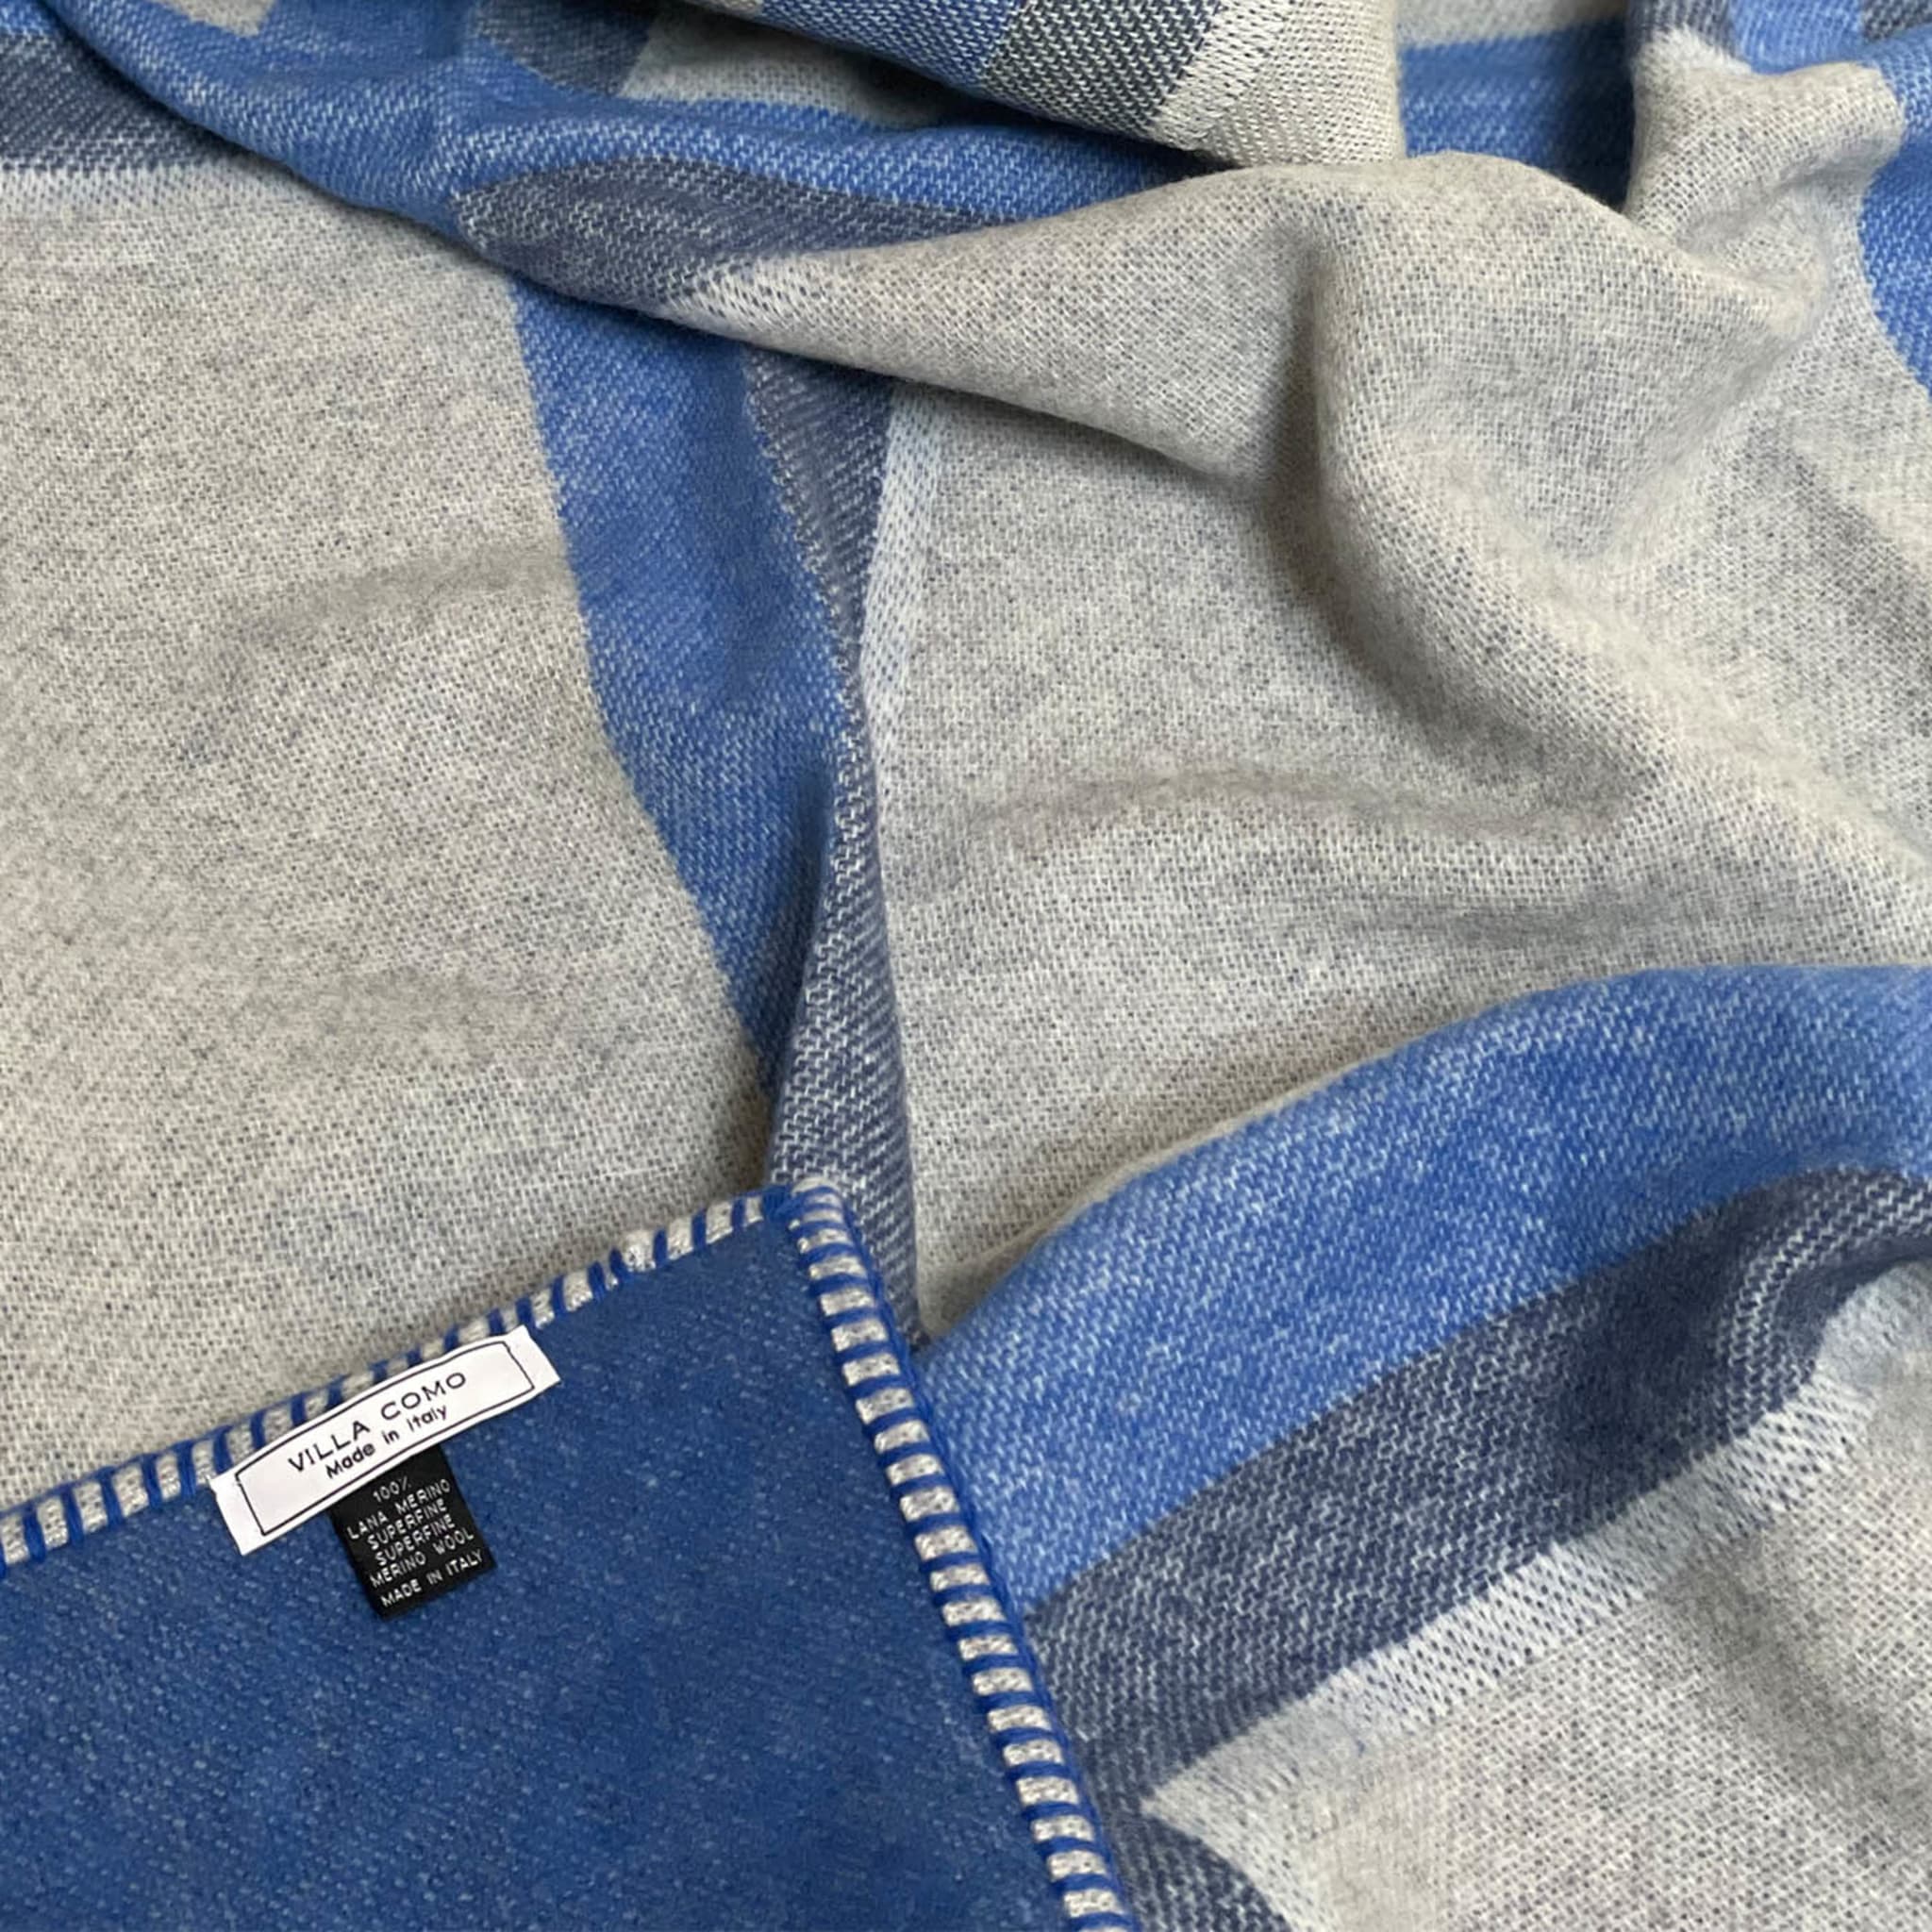 Cornice Blue & Gray Blanket - Alternative view 2